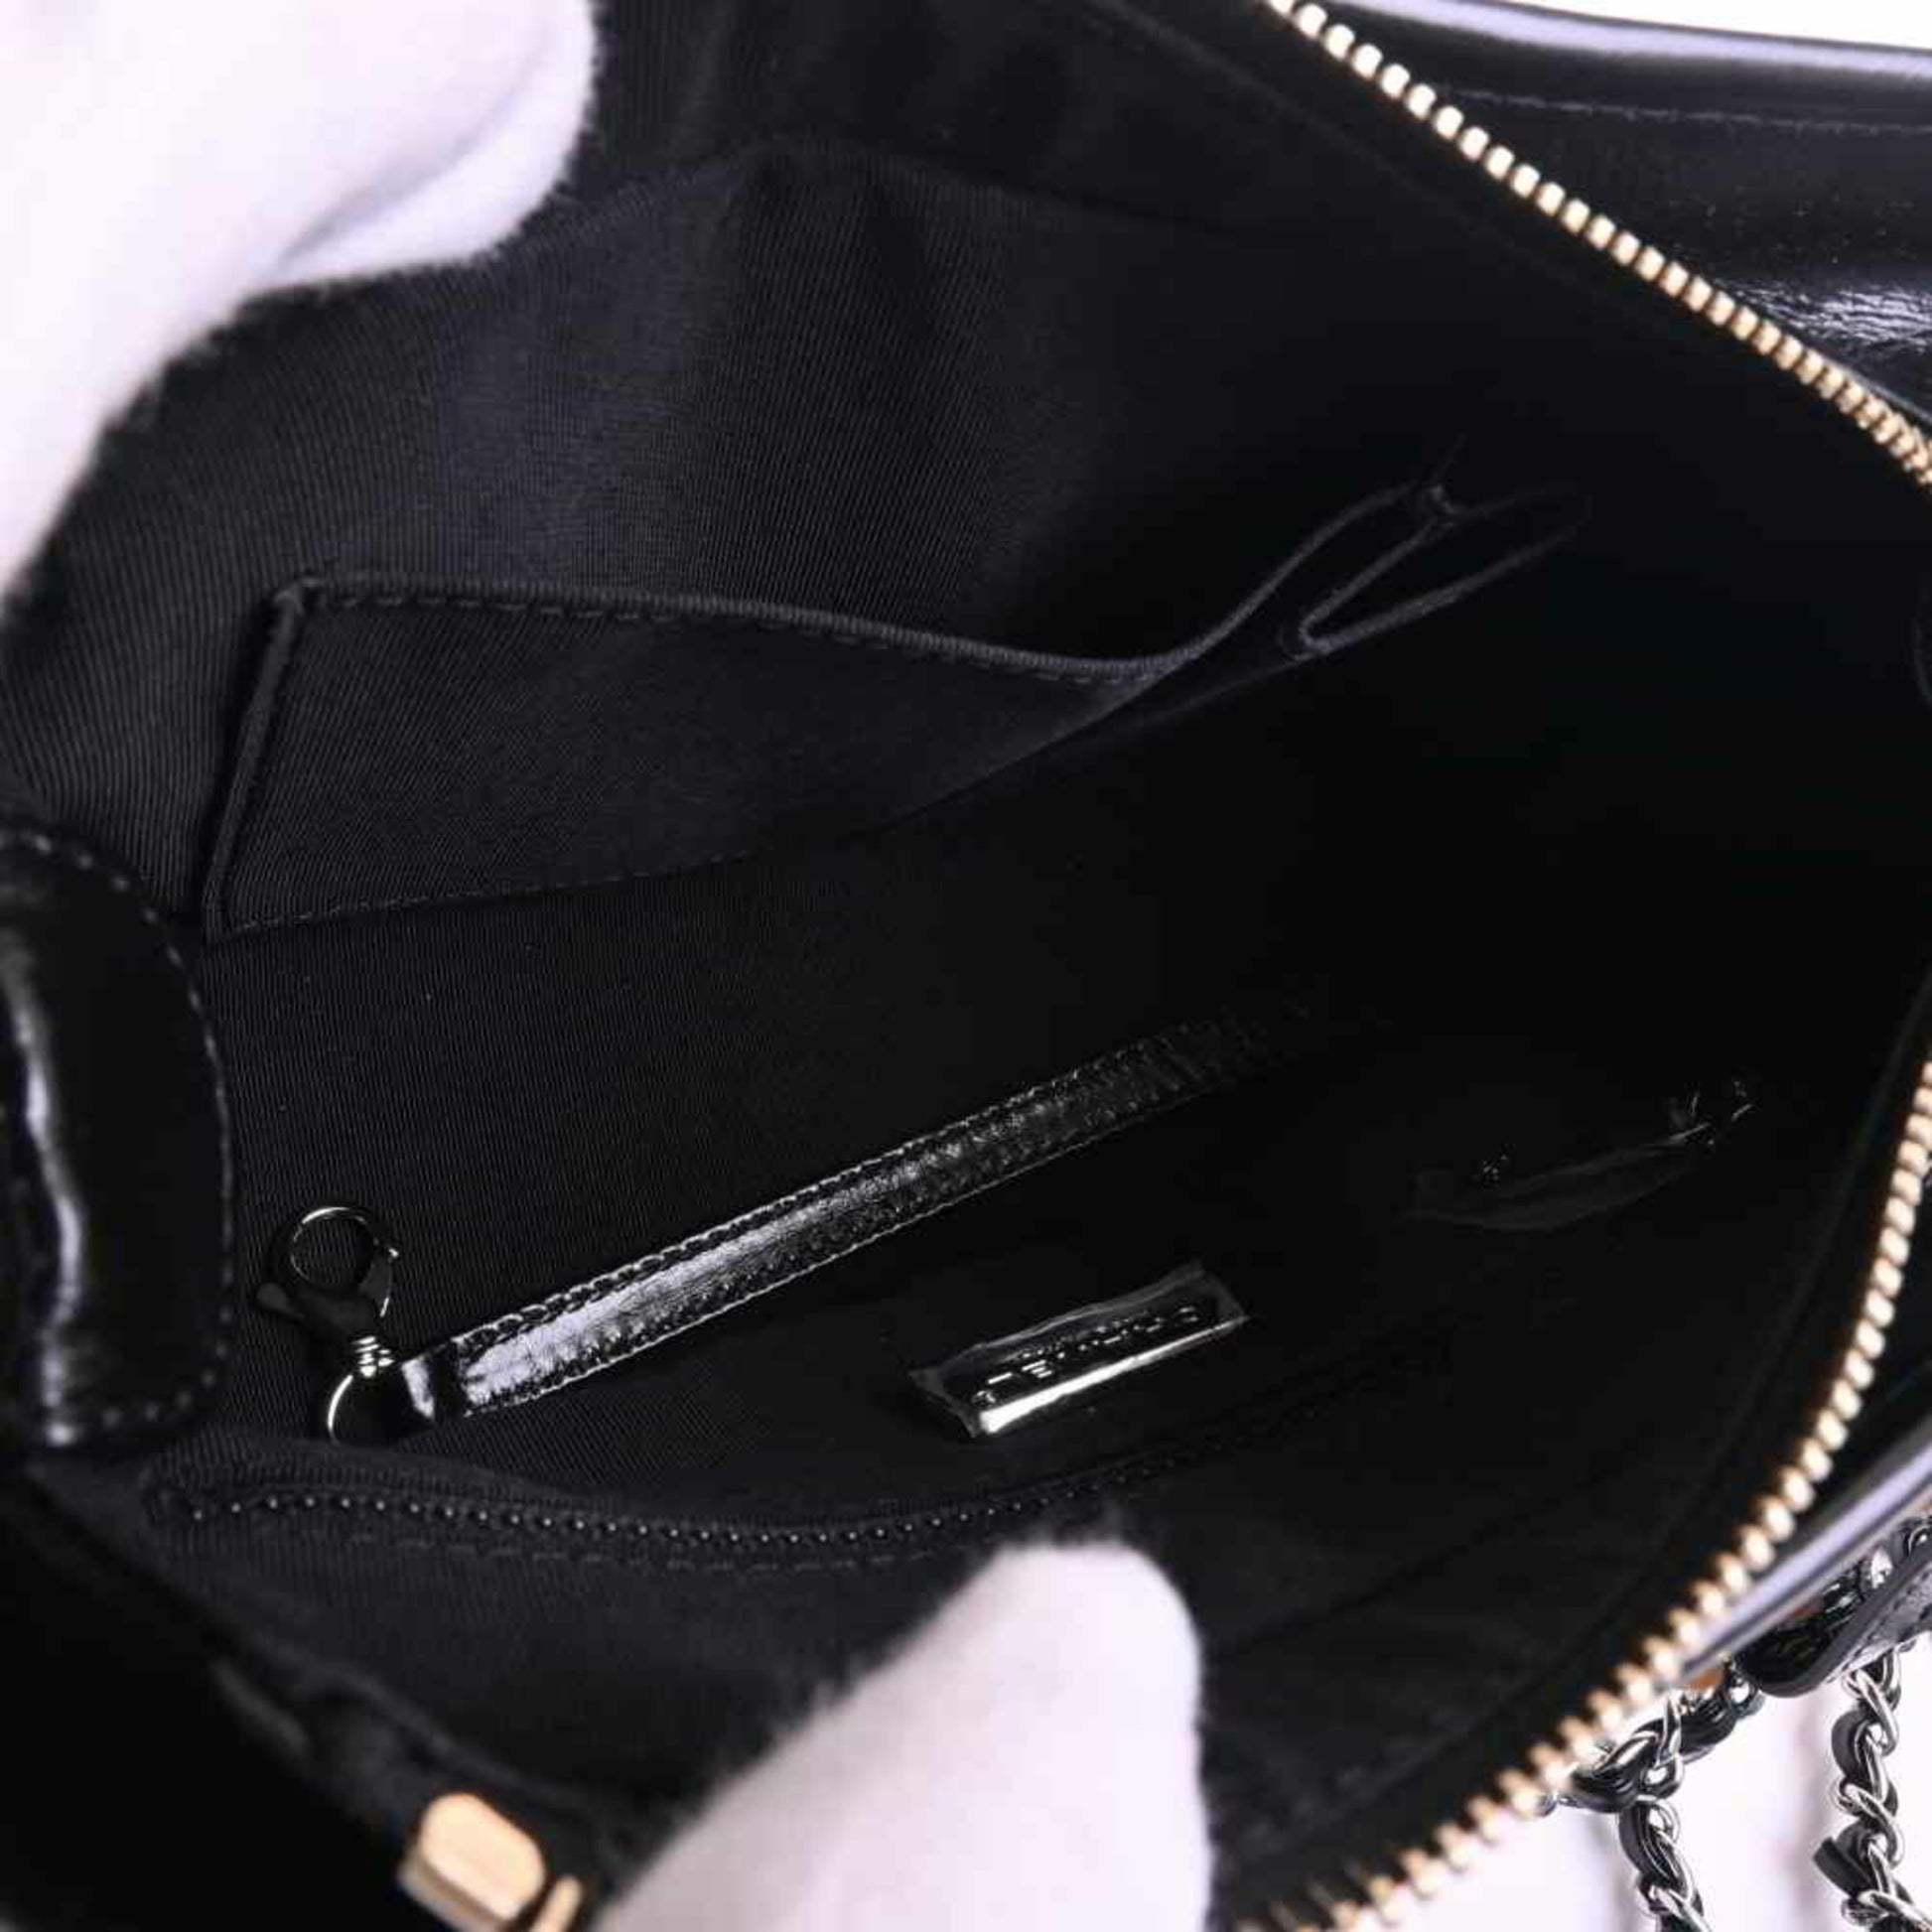 CHANEL sequin leather Gabrielle de Small hobo chain shoulder bag black